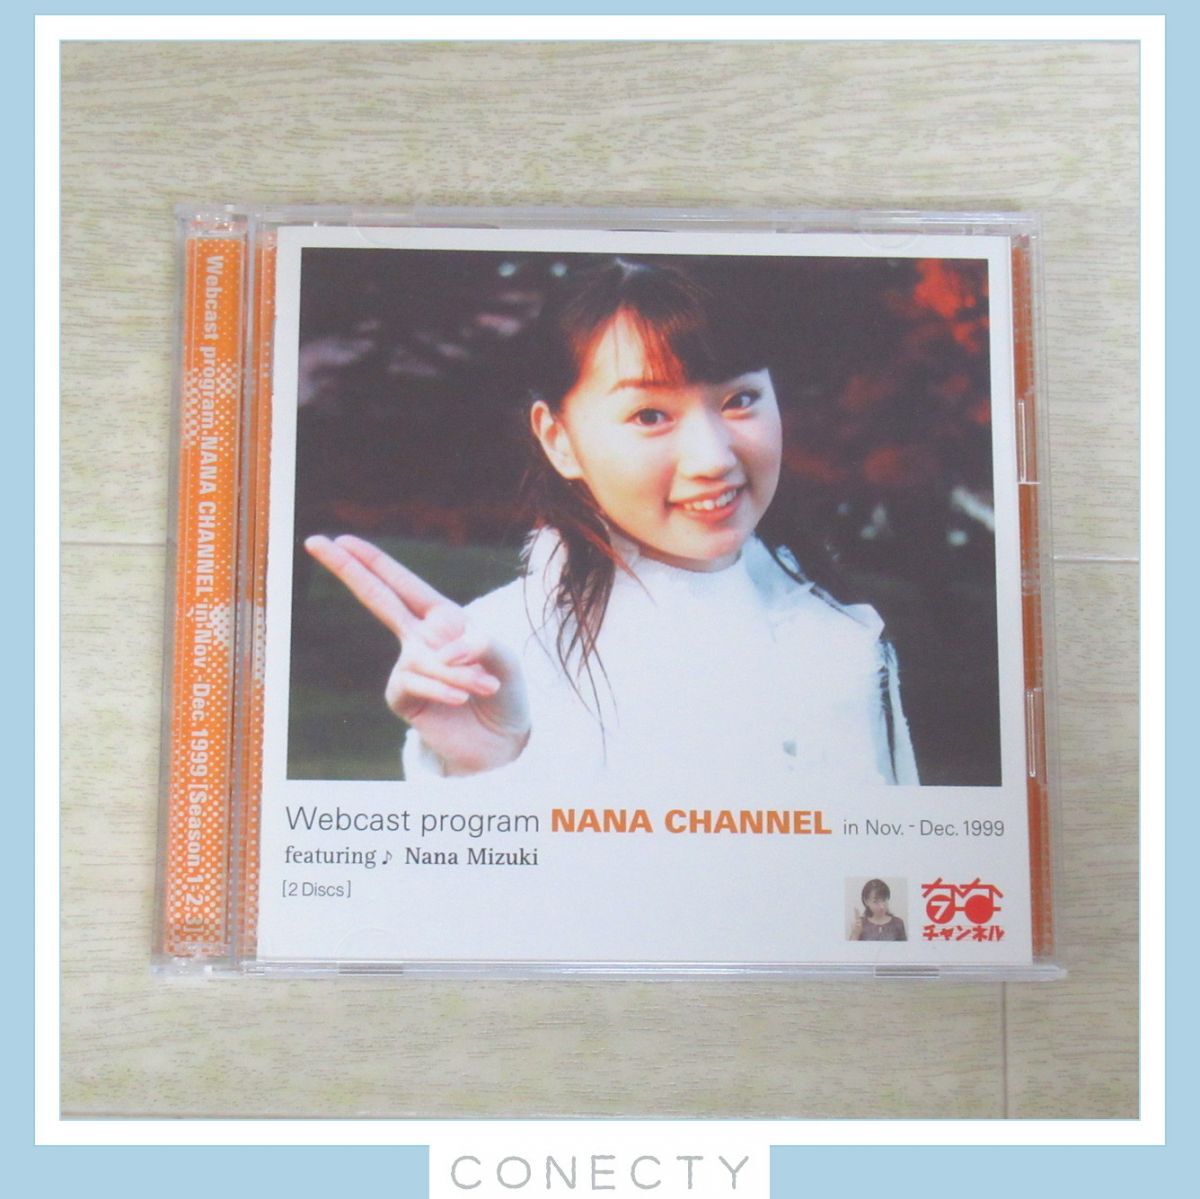 [ редкость ] вода ...Webcast program NANA CHANNEL in Nov.-Dec.1999 [Season 1-23] радио CD.. канал [J3[SP